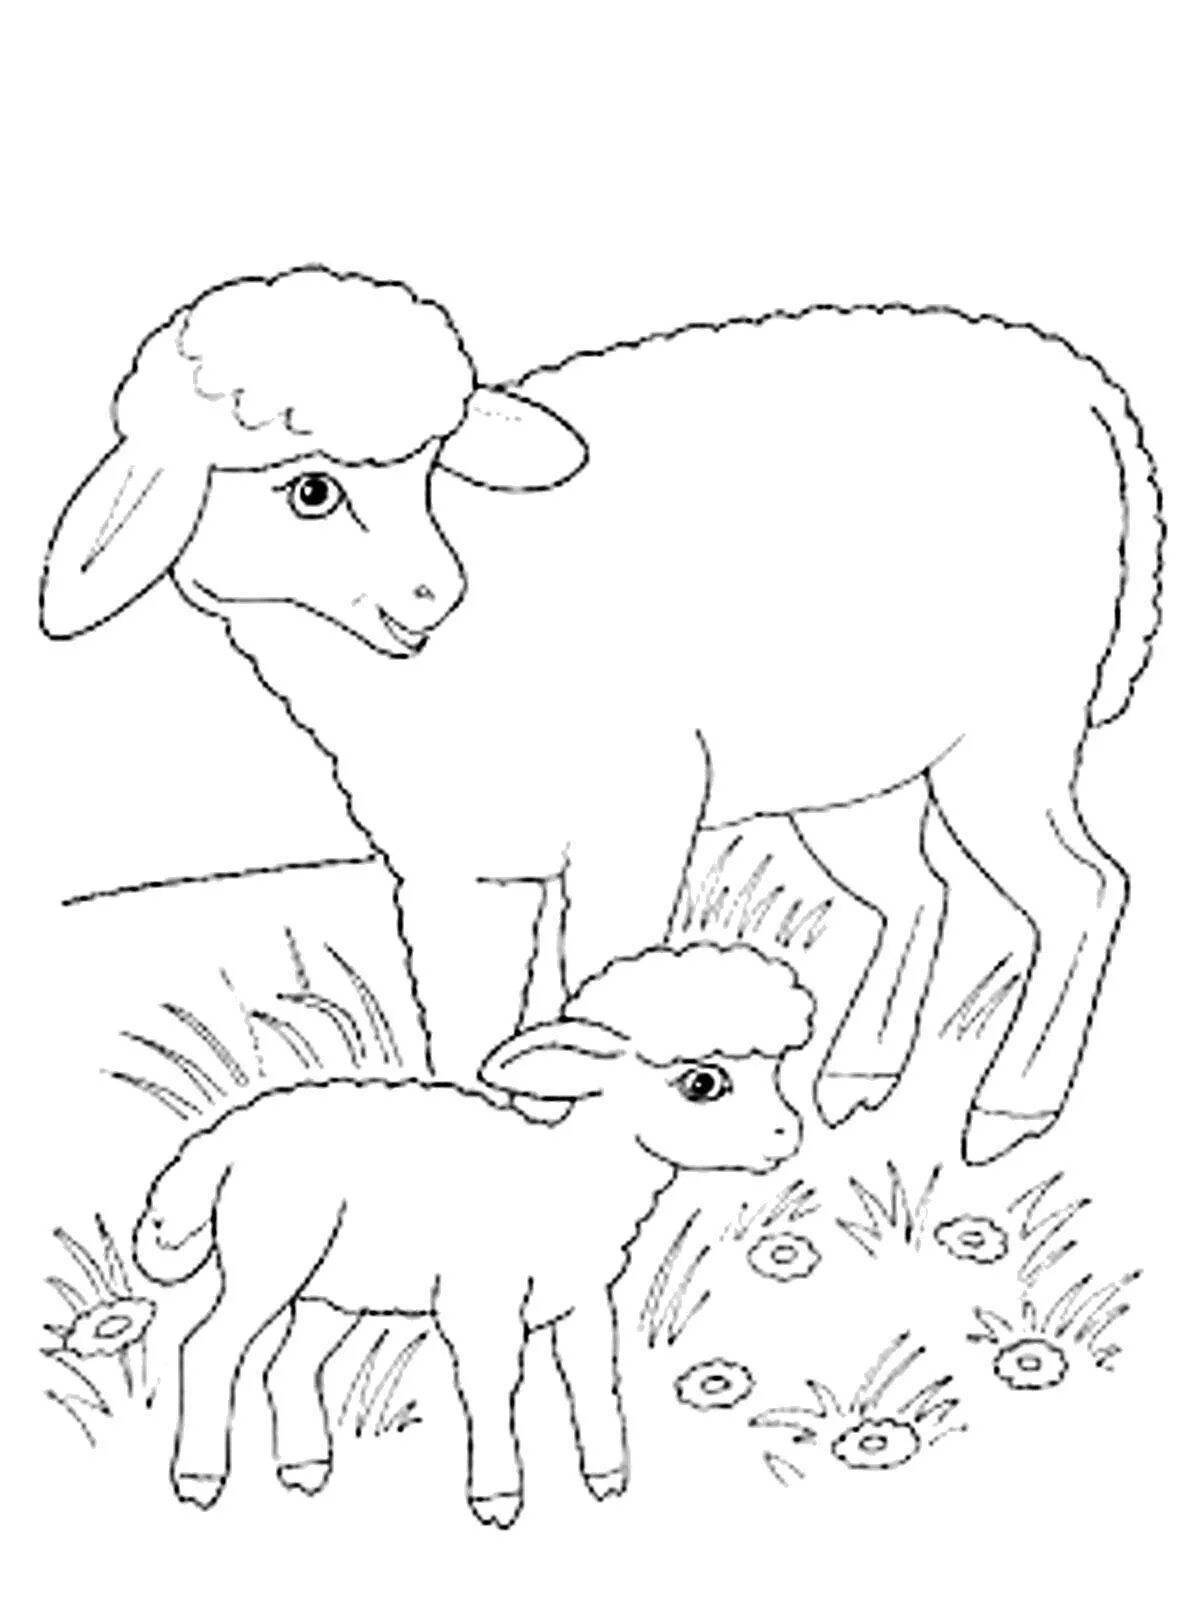 Snuggly coloring page lamb для детей